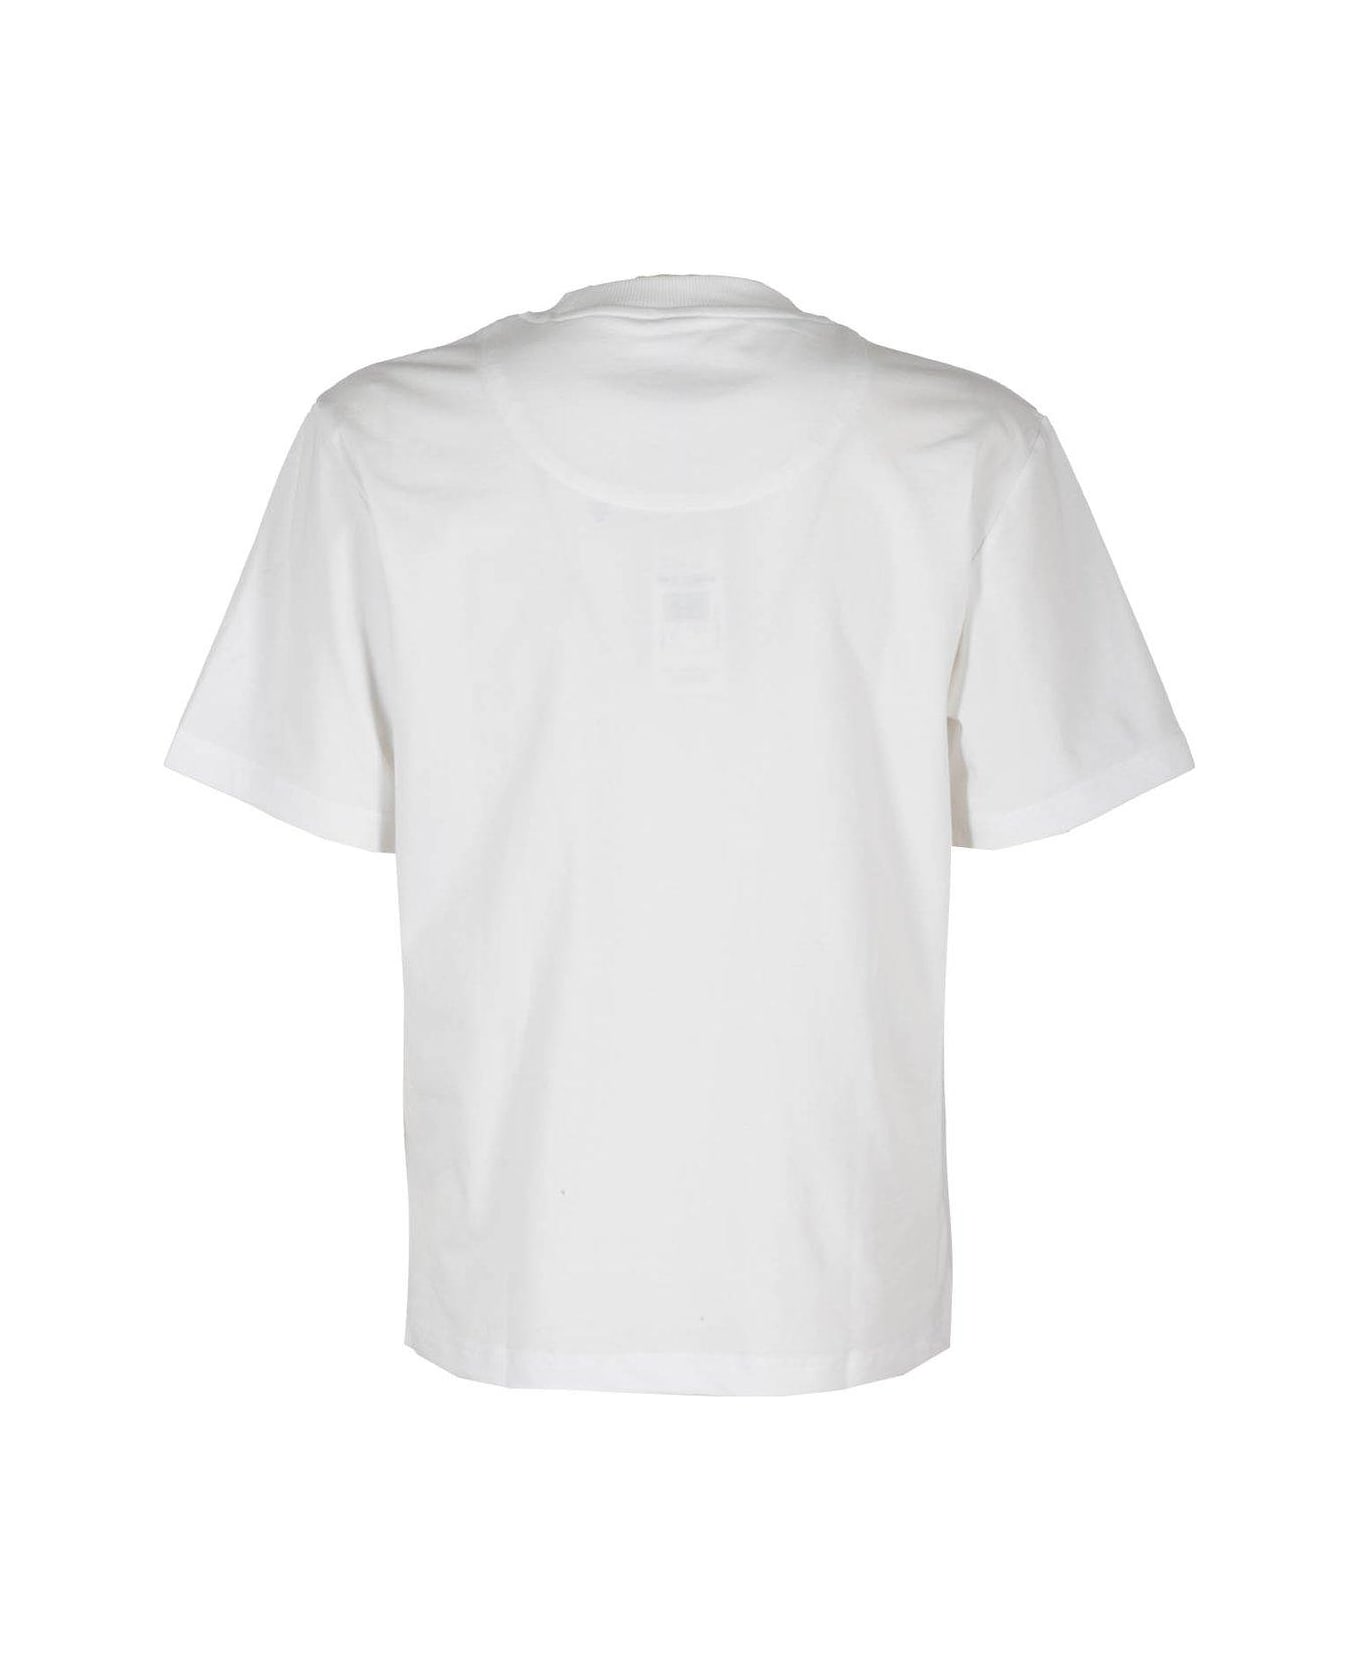 Adidas by Stella McCartney Logo Printed Crewneck T-shirt - White